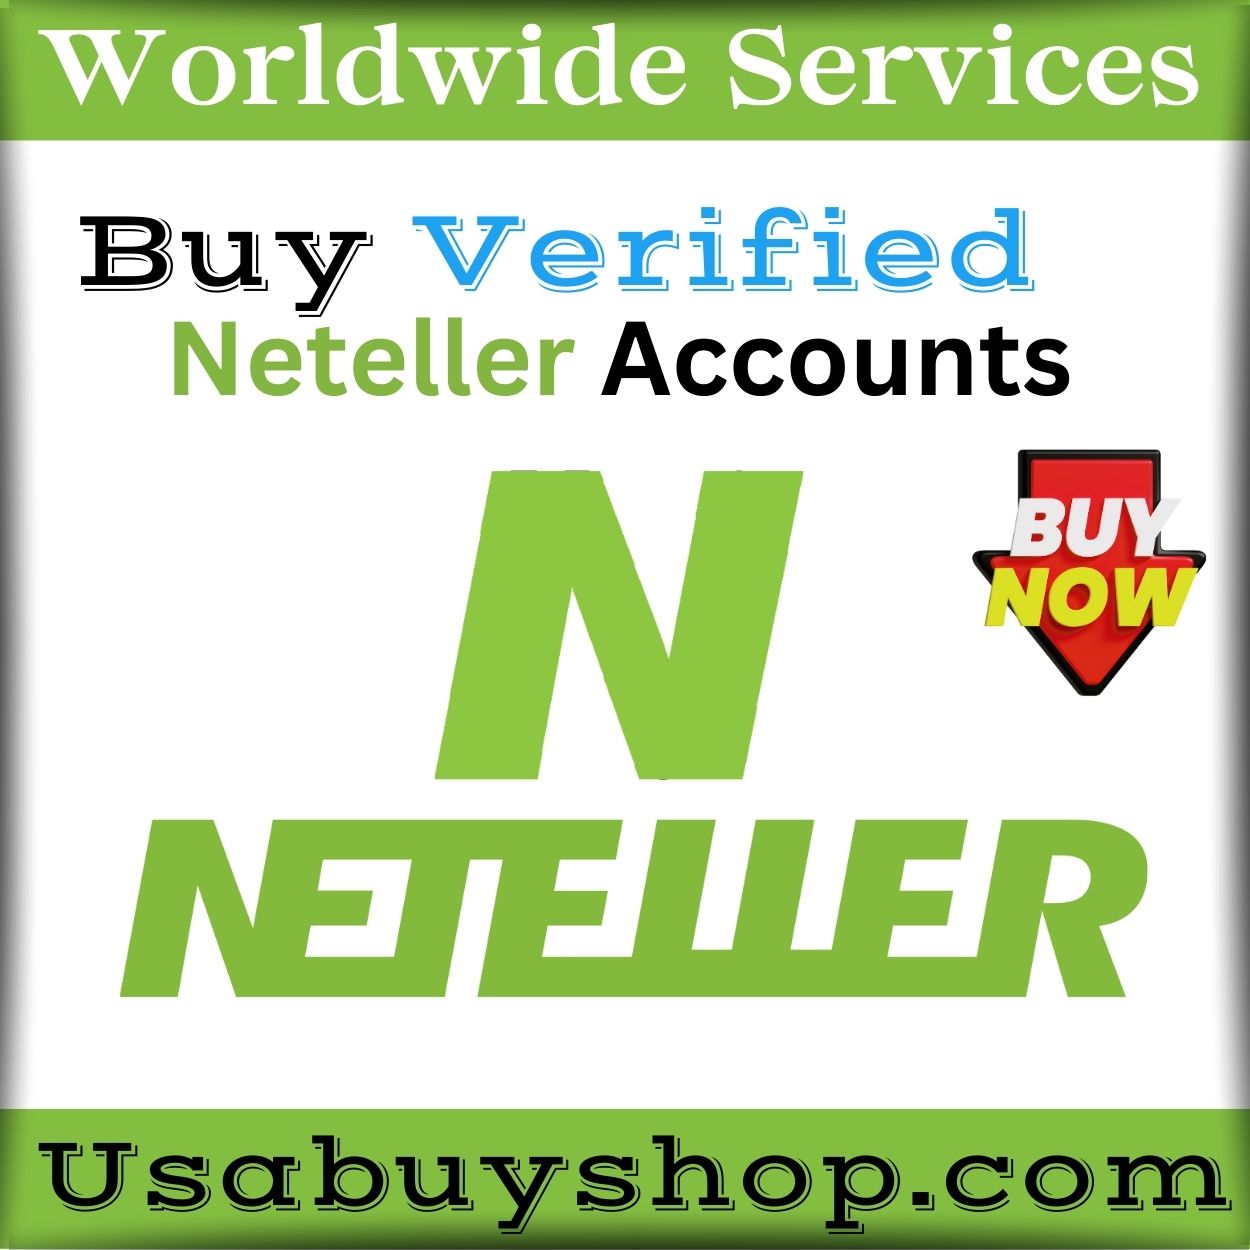 Buy Verified Neteller Accounts - 100% Fully Verified Account